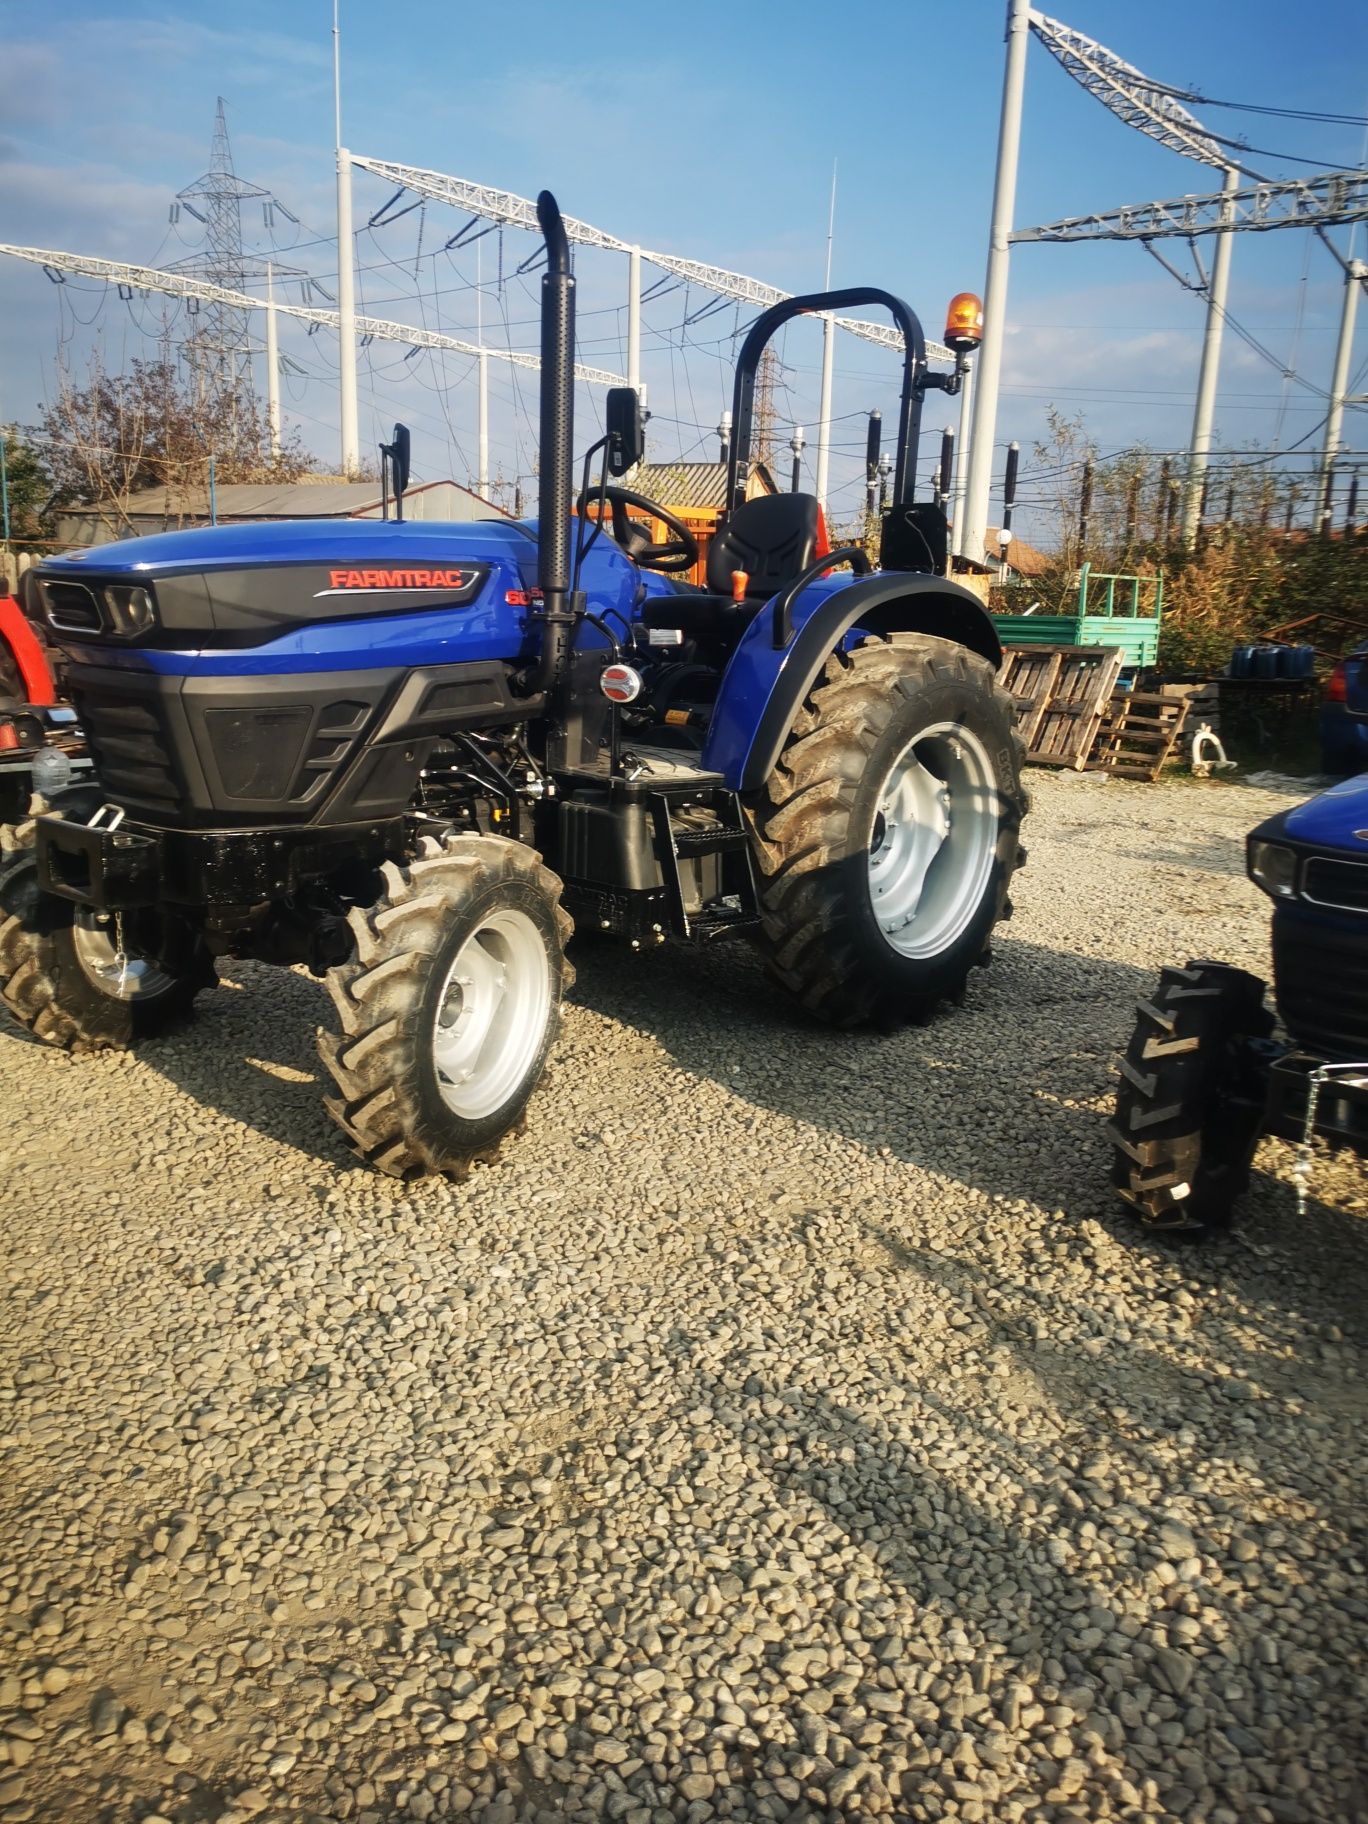 Tractor nou, Farmtrac 6050, 50 cai, fonduri europene, solis, lovol tym